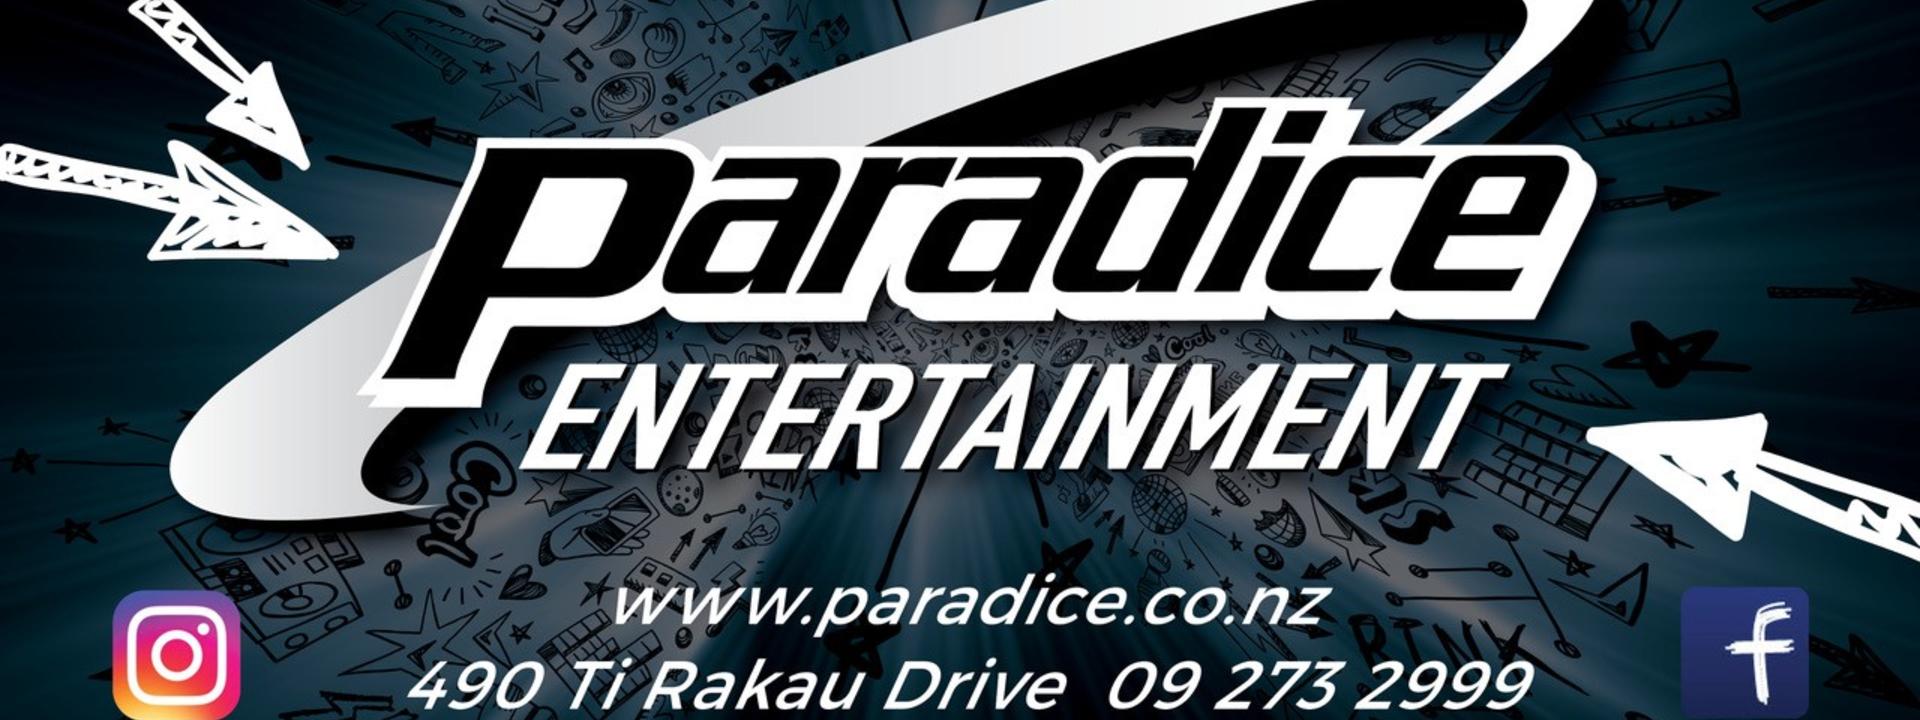 paradice-entertainment-logo-jpeg-all-attractions.jpg